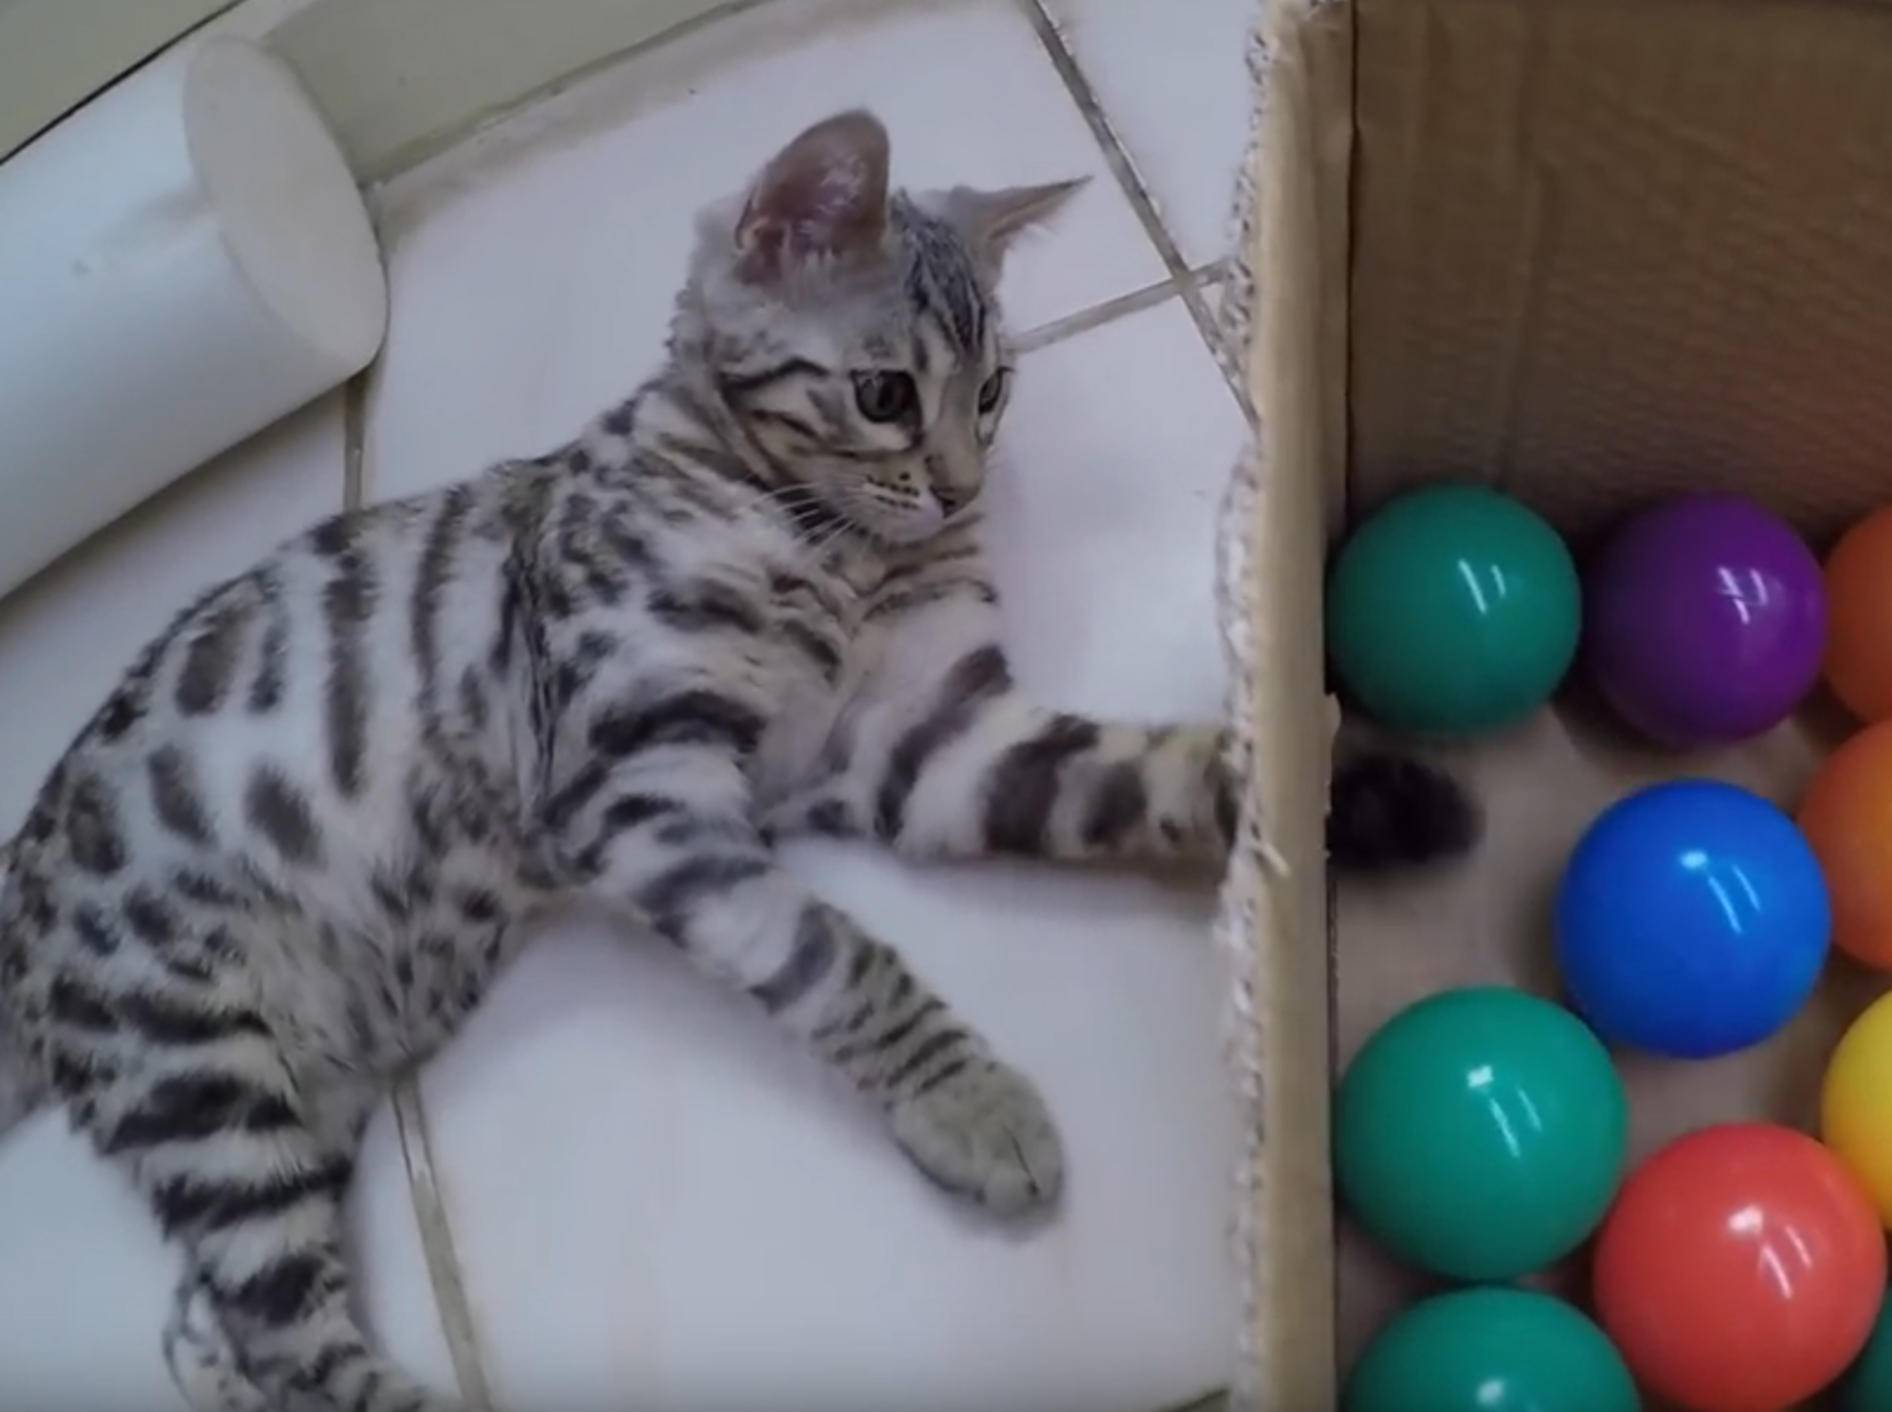 Katze Boomer findet Bällebad richtig klasse! – YouTube / CATMANTOO